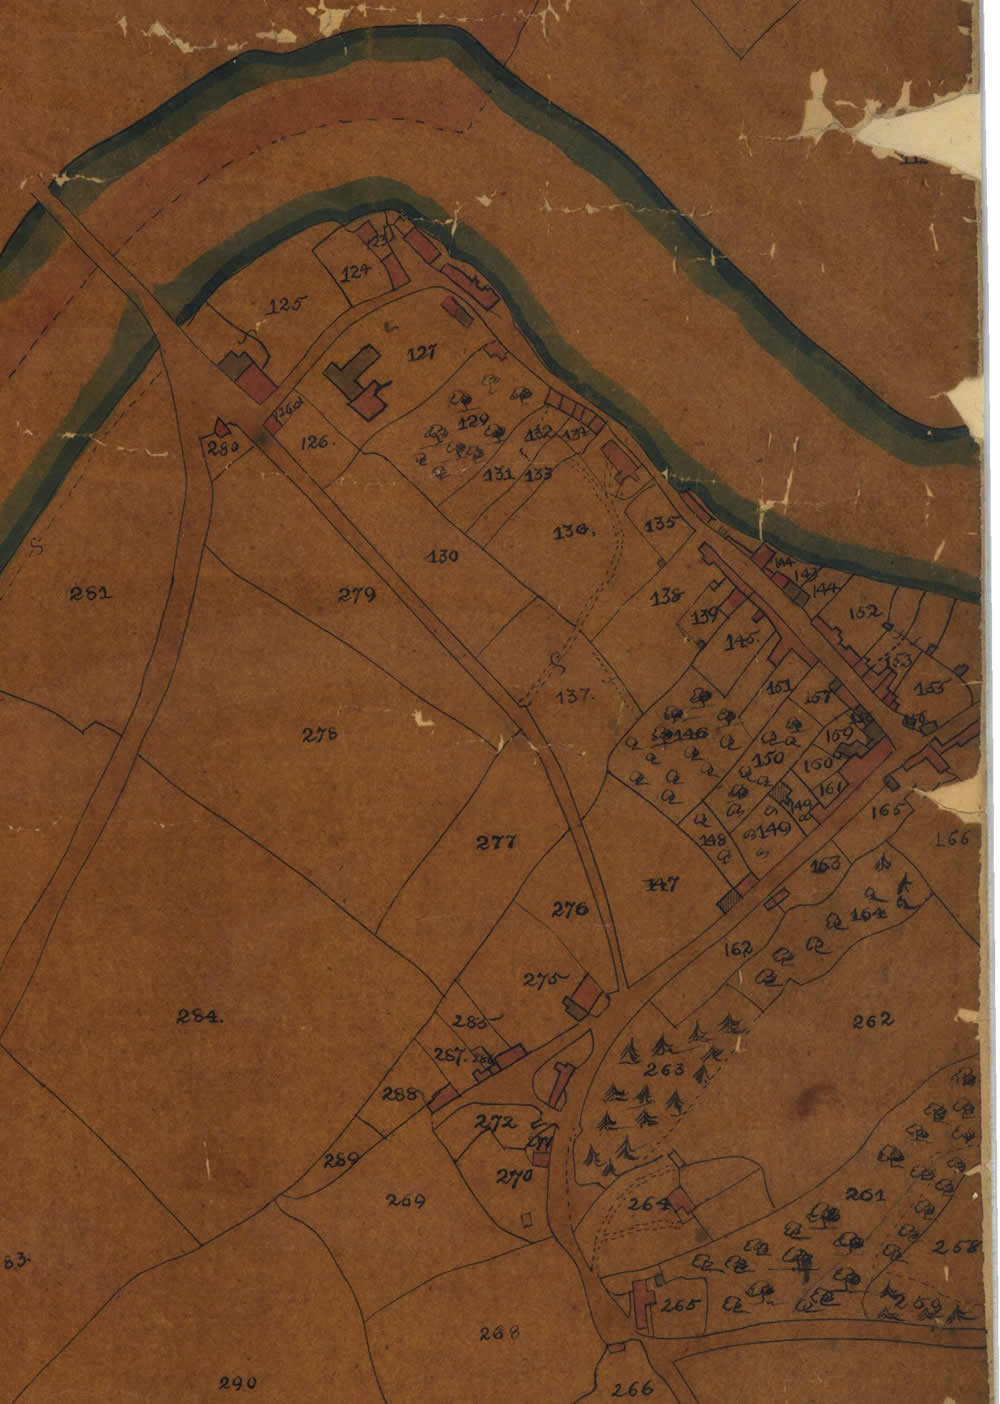 Tithe Map of Ultra Pontem Caerleon 1840 in the Parish of Christchurch Newport Mon.